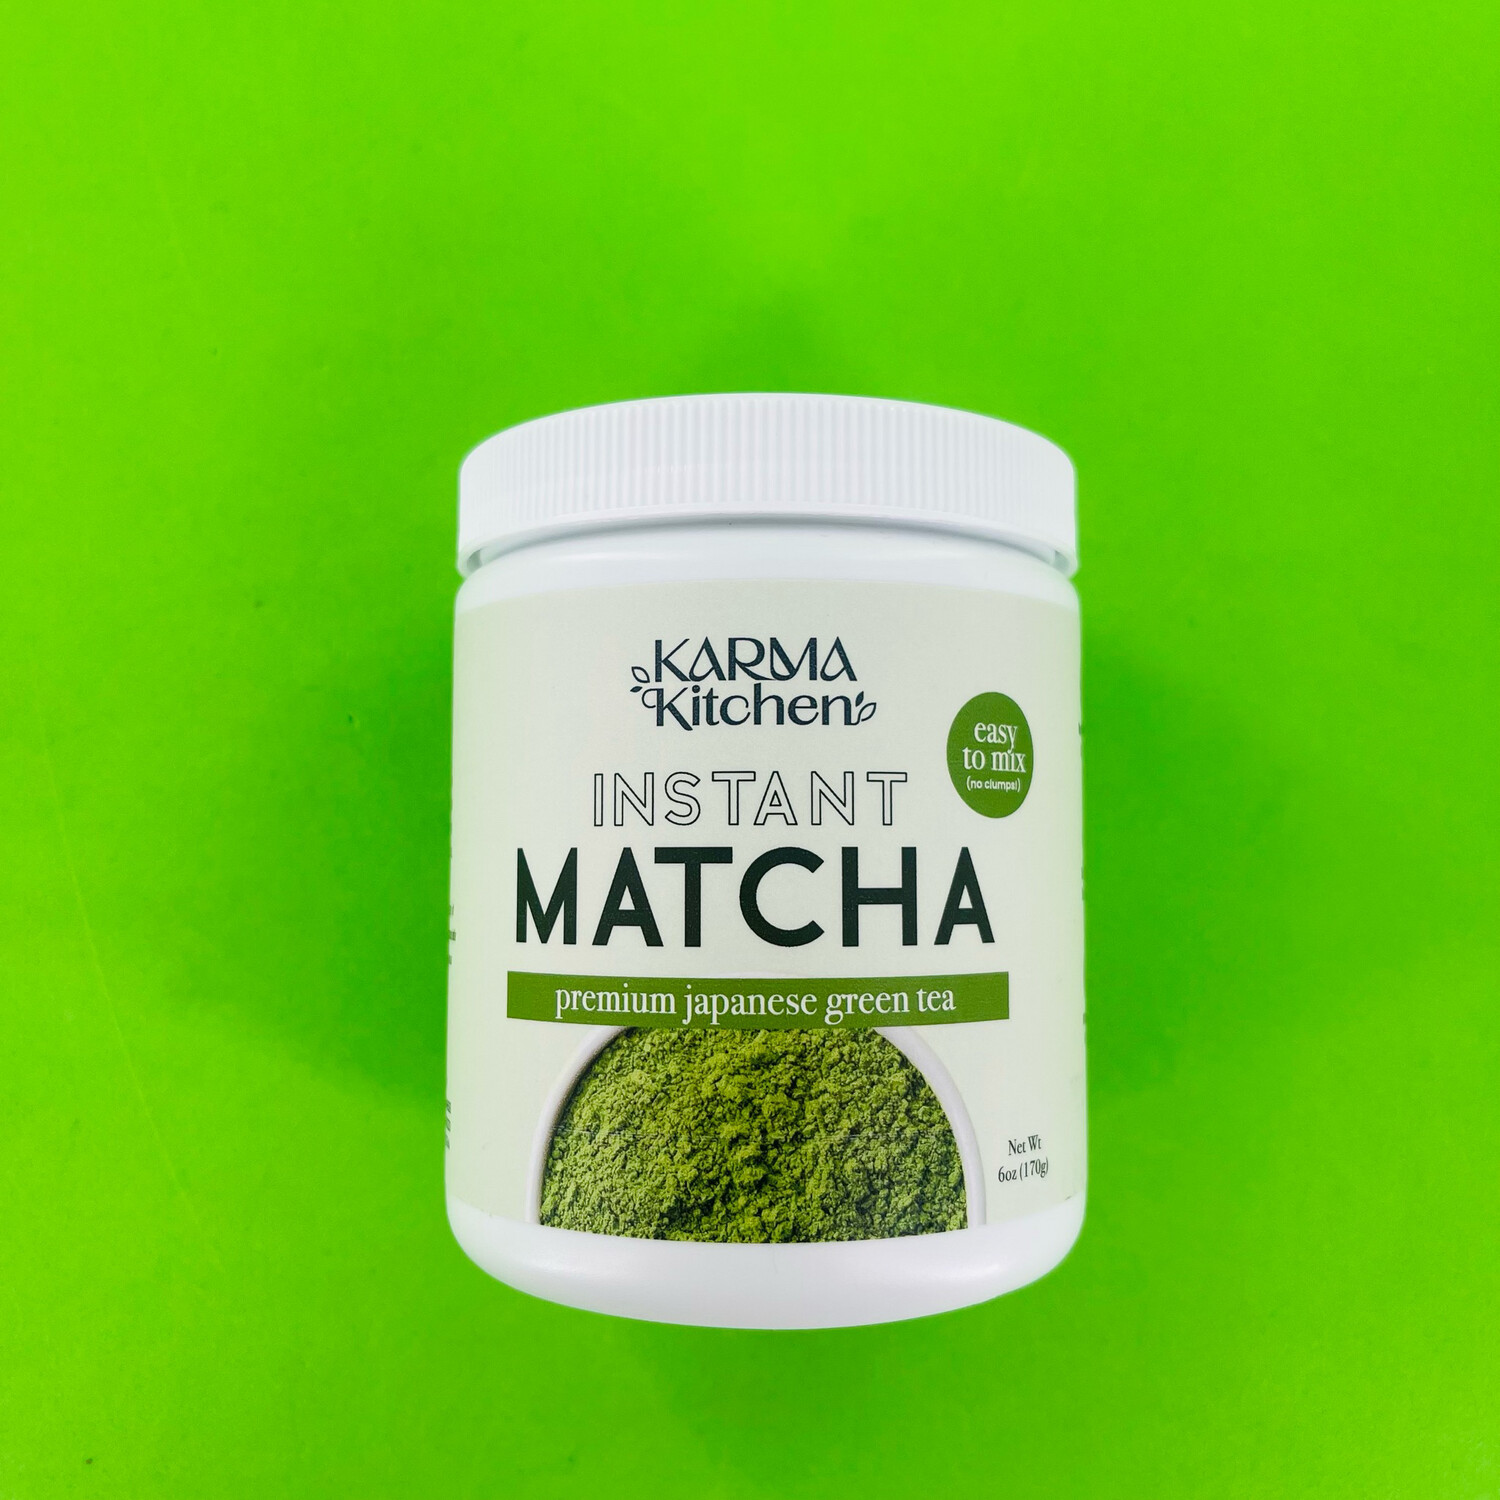 Karma Kitchen Instant Matcha Premium Japanese Green Tea 6 Oz